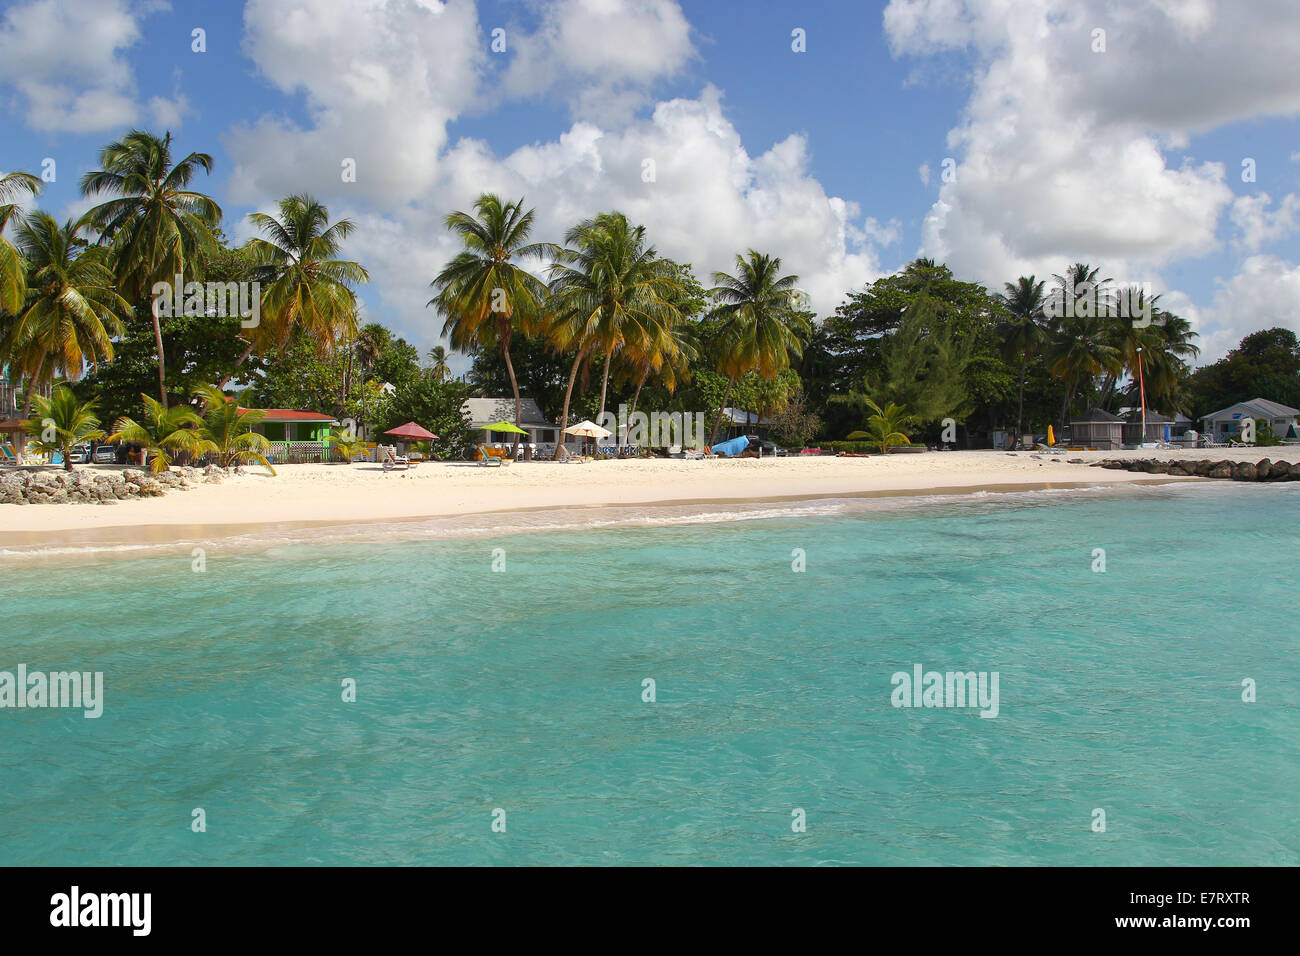 Spiaggia caraibica, palme, cielo blu, Foto Stock